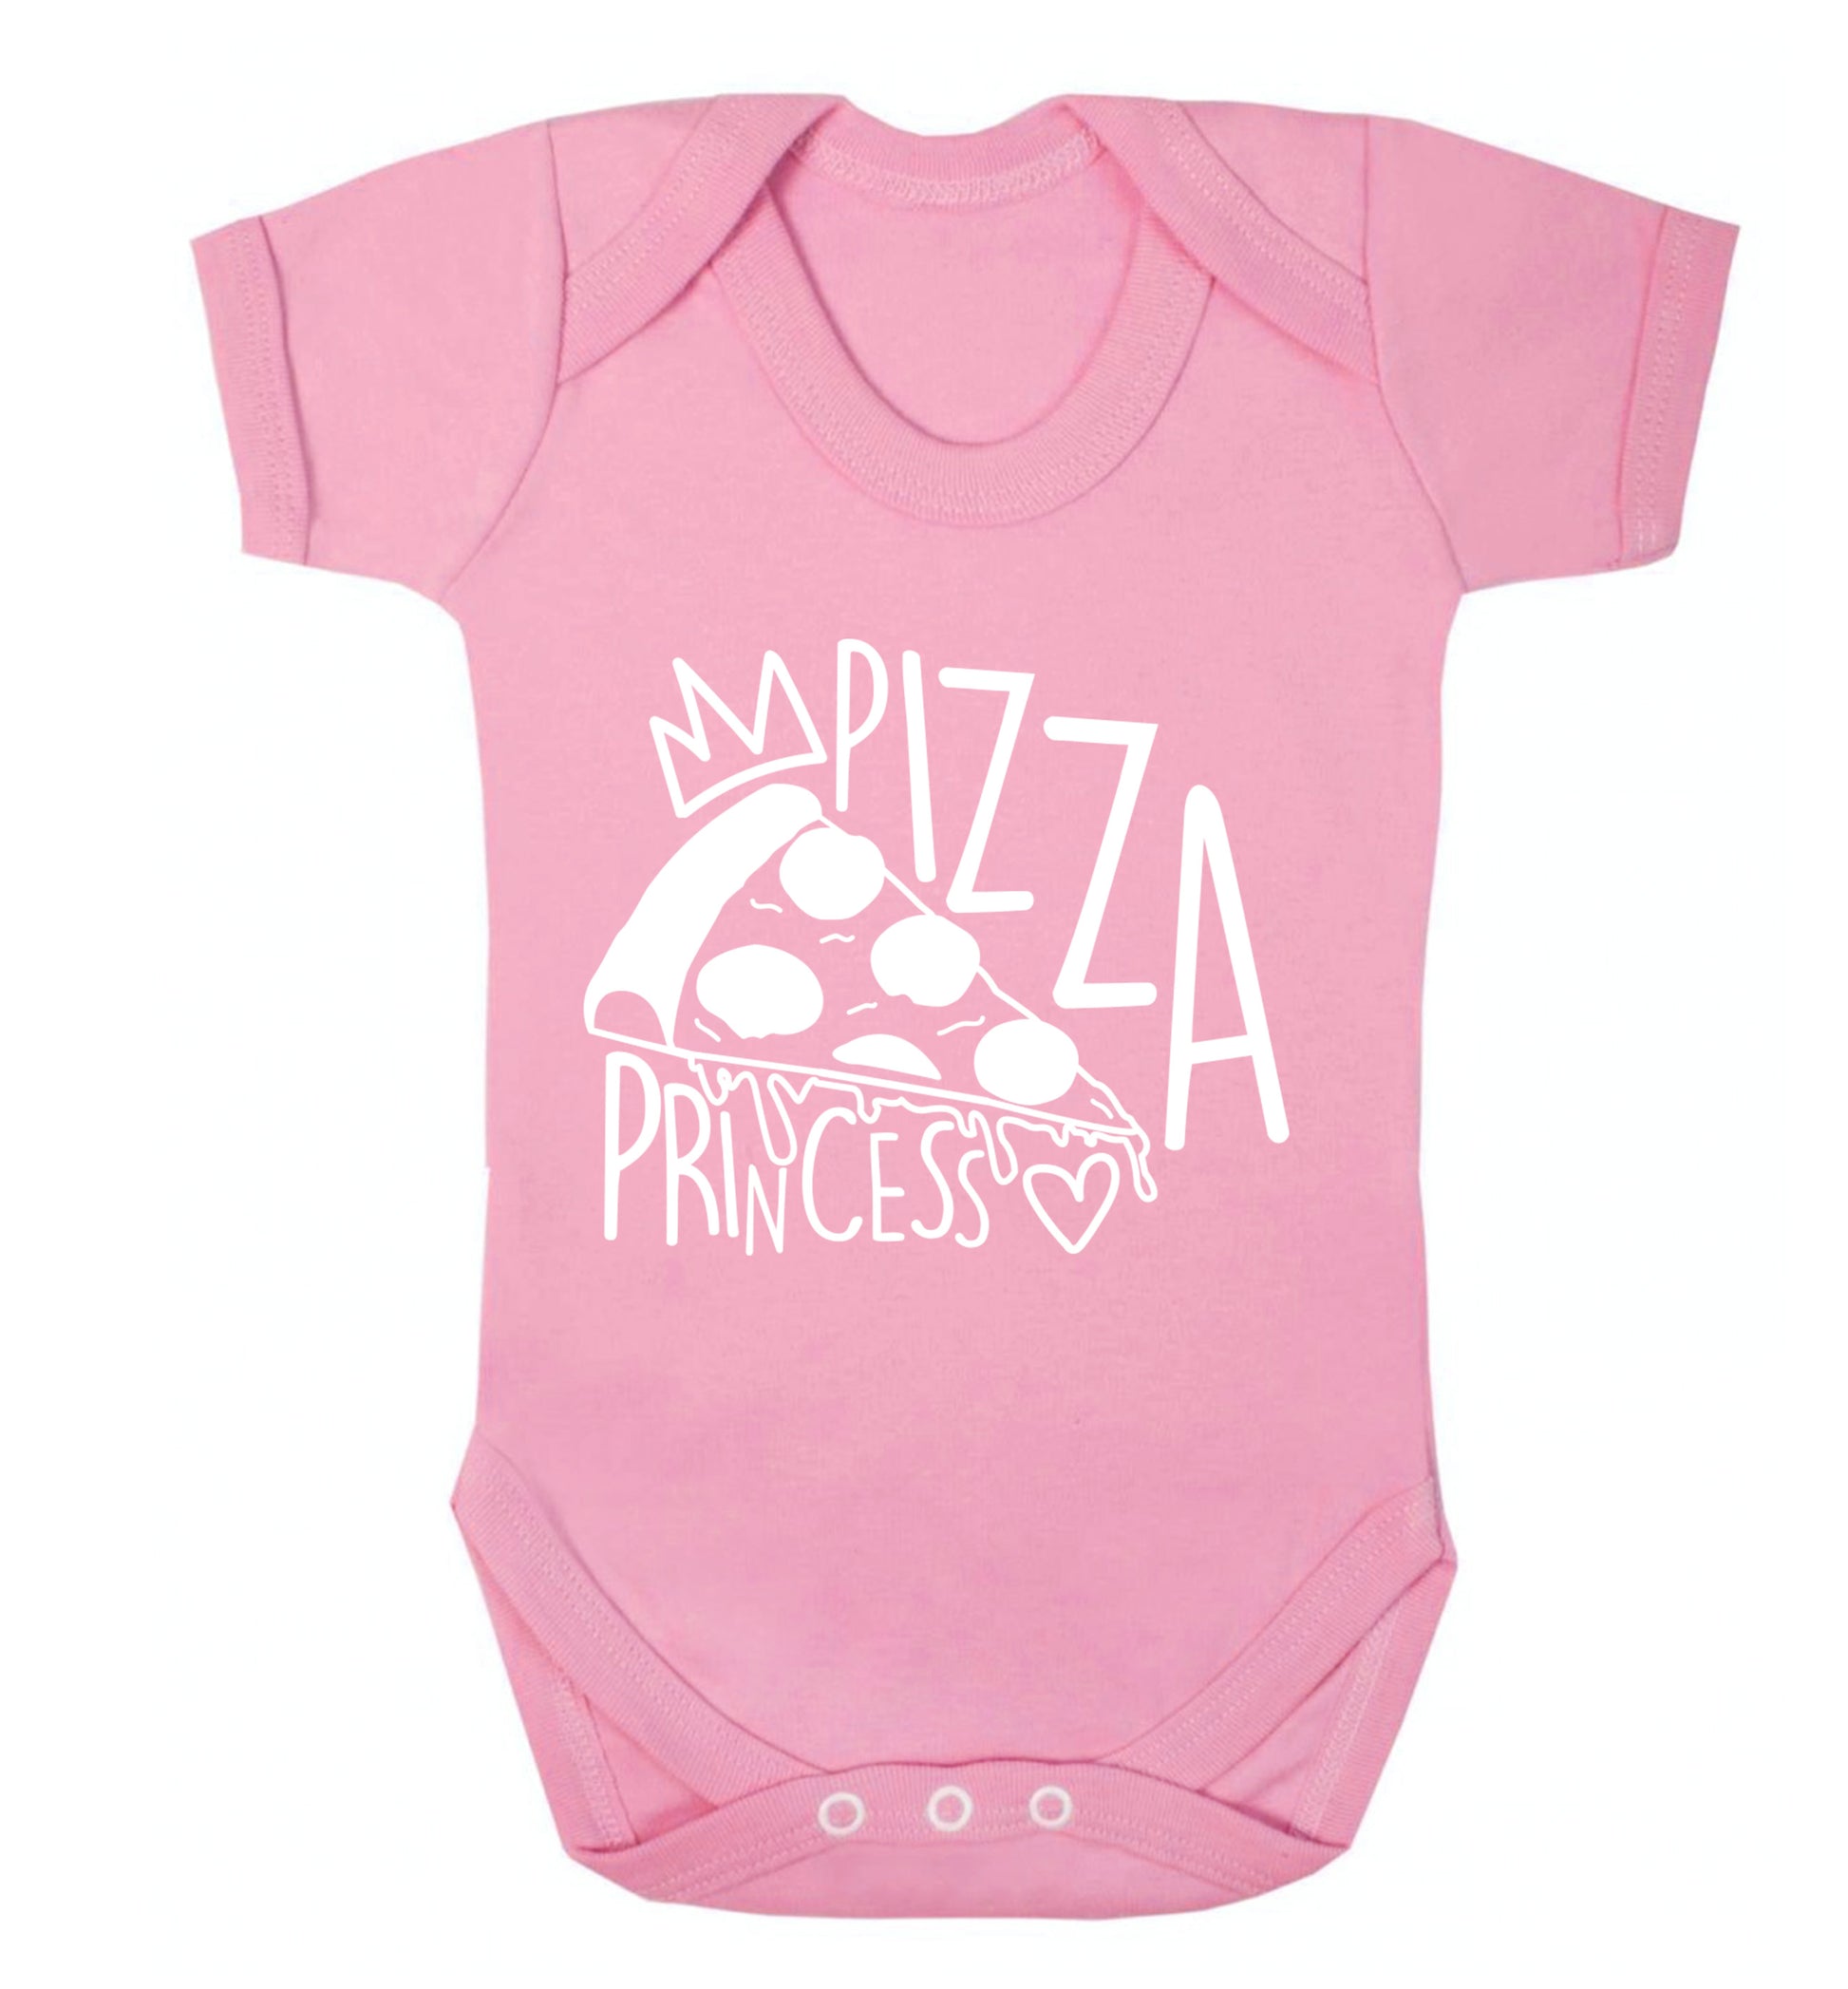 Pizza Princess Baby Vest pale pink 18-24 months